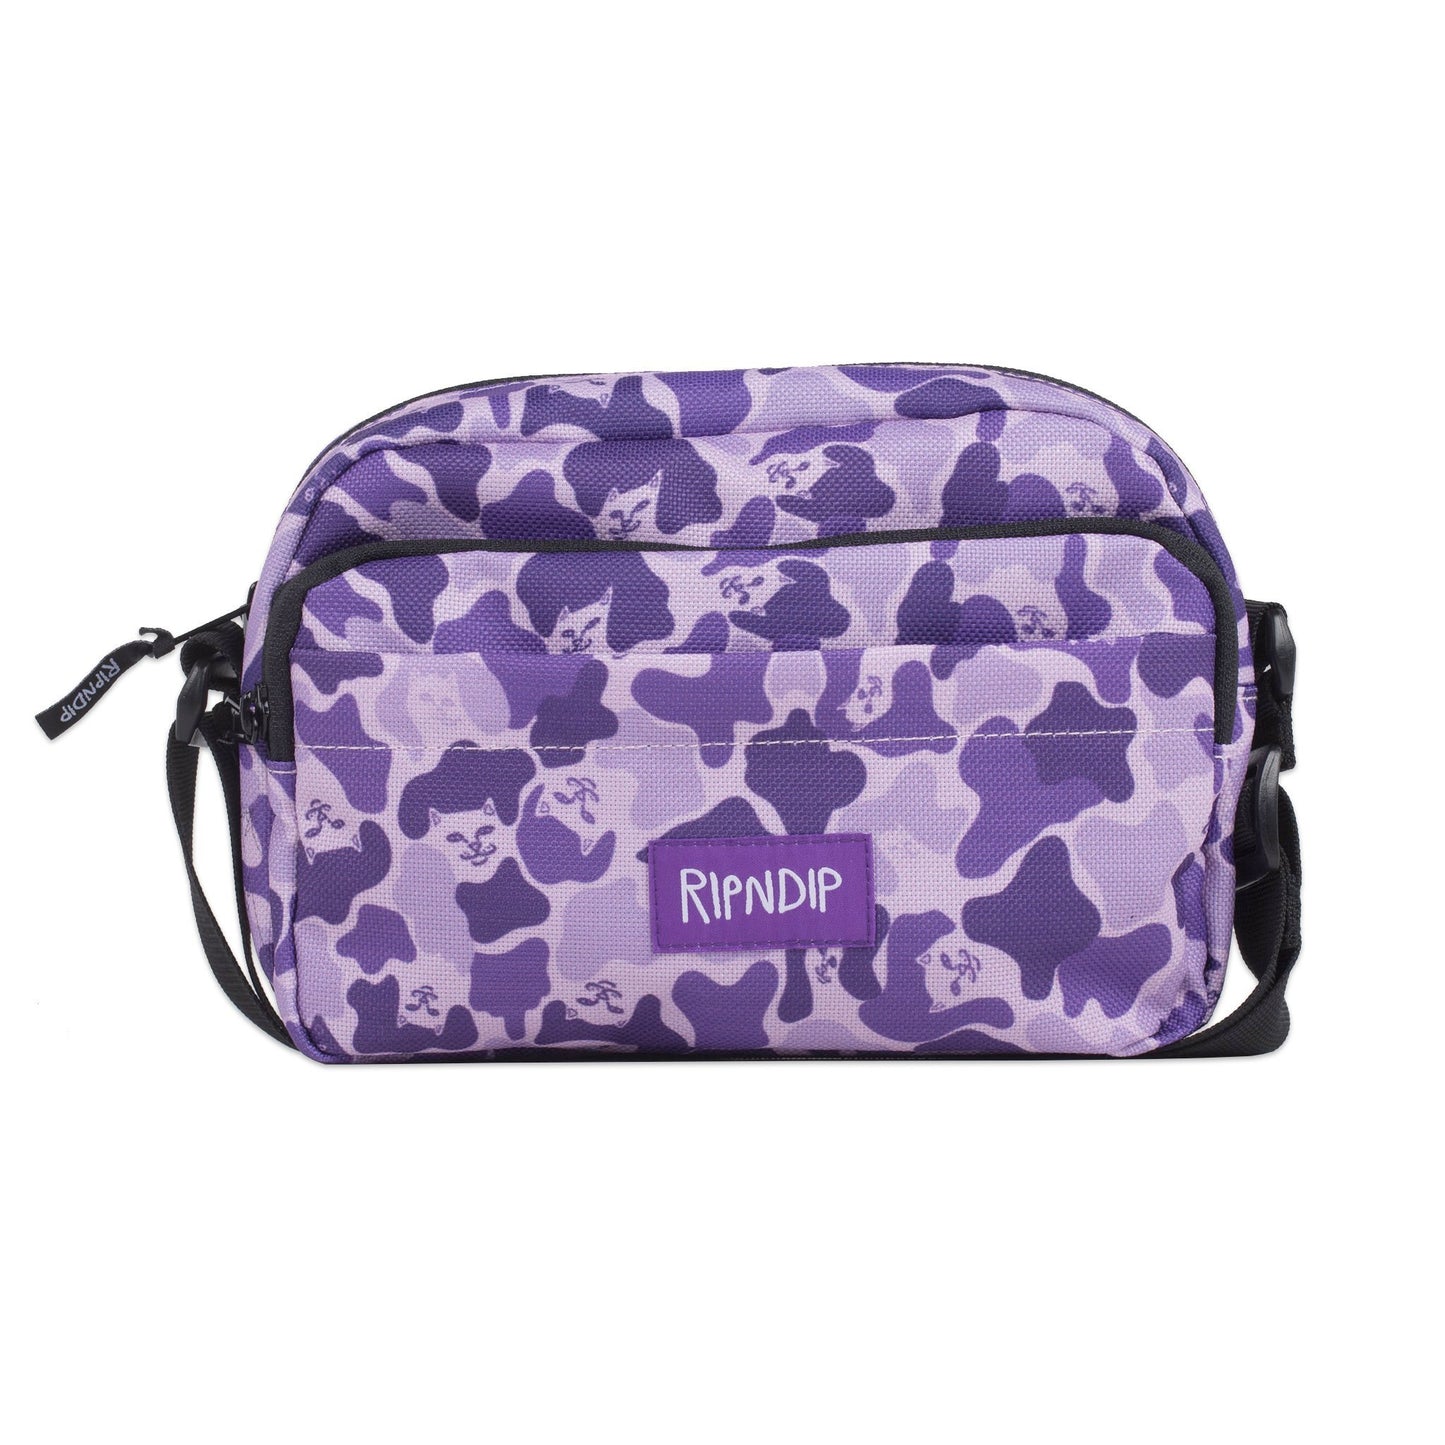 RIPNDIP - Invisible Shoulder Bag, Purple Camo - The Giant Peach